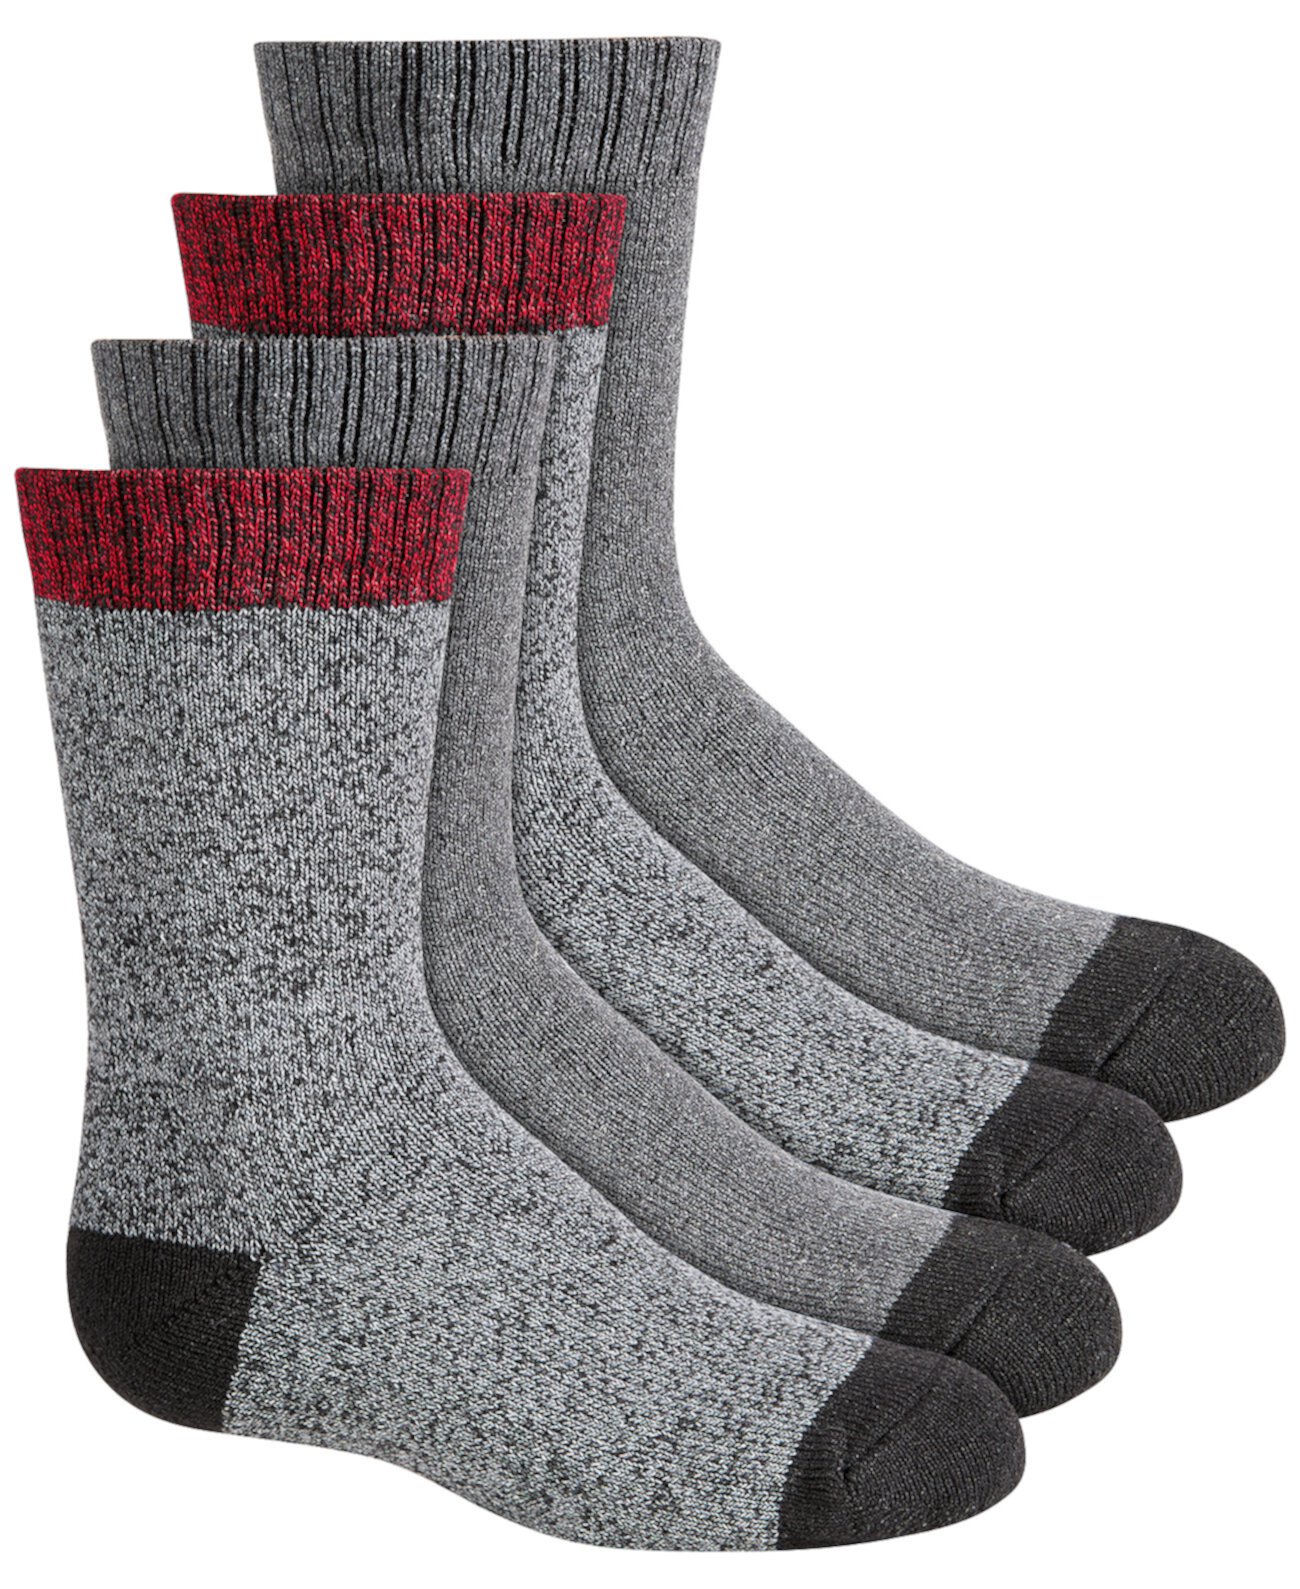 Биг Бойз 4-Пк. Теплые носки с мраморной текстурой Trimfit